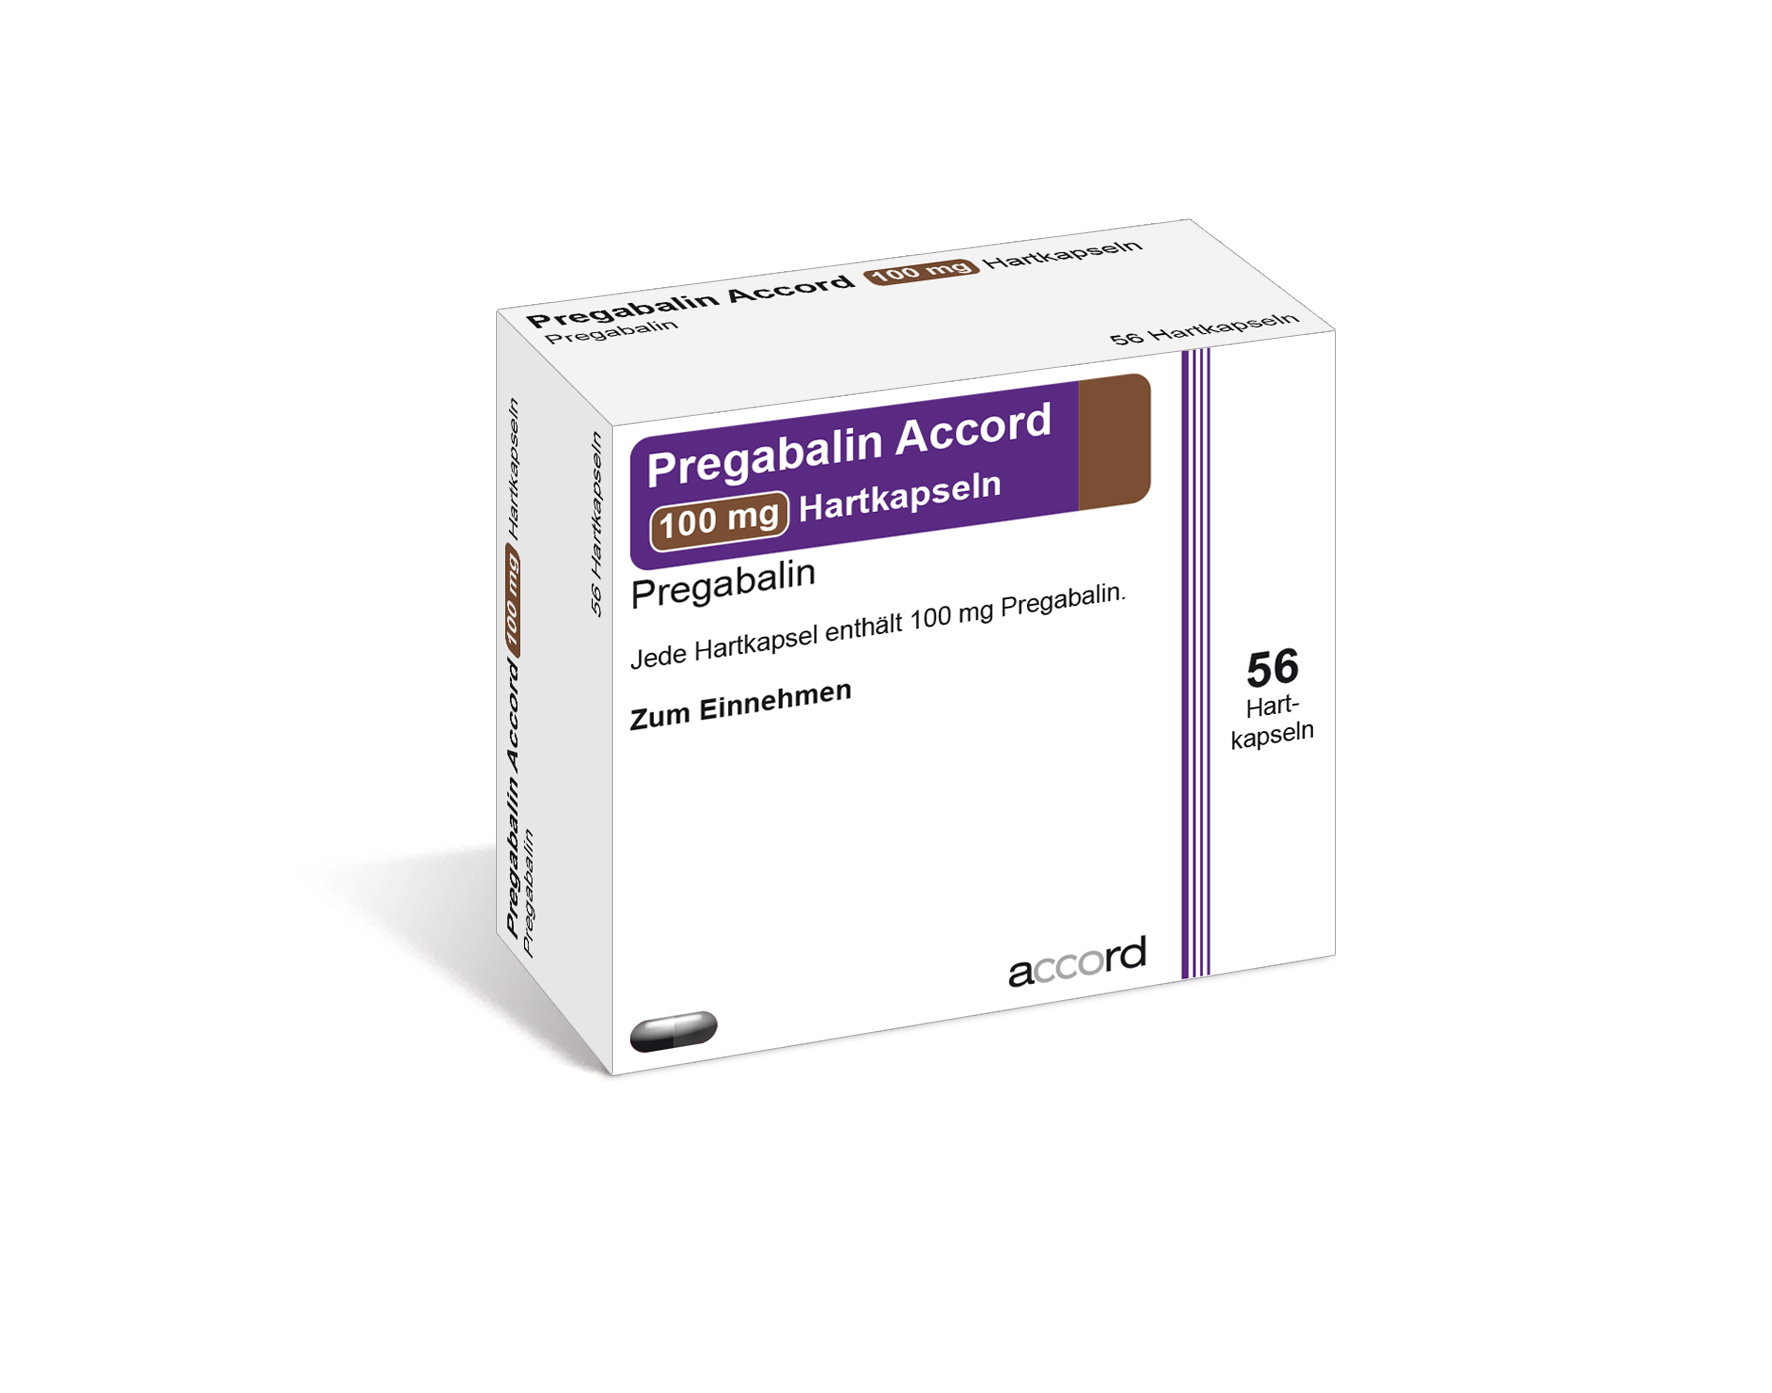 Accord Packshot Pregabalin 100 mg